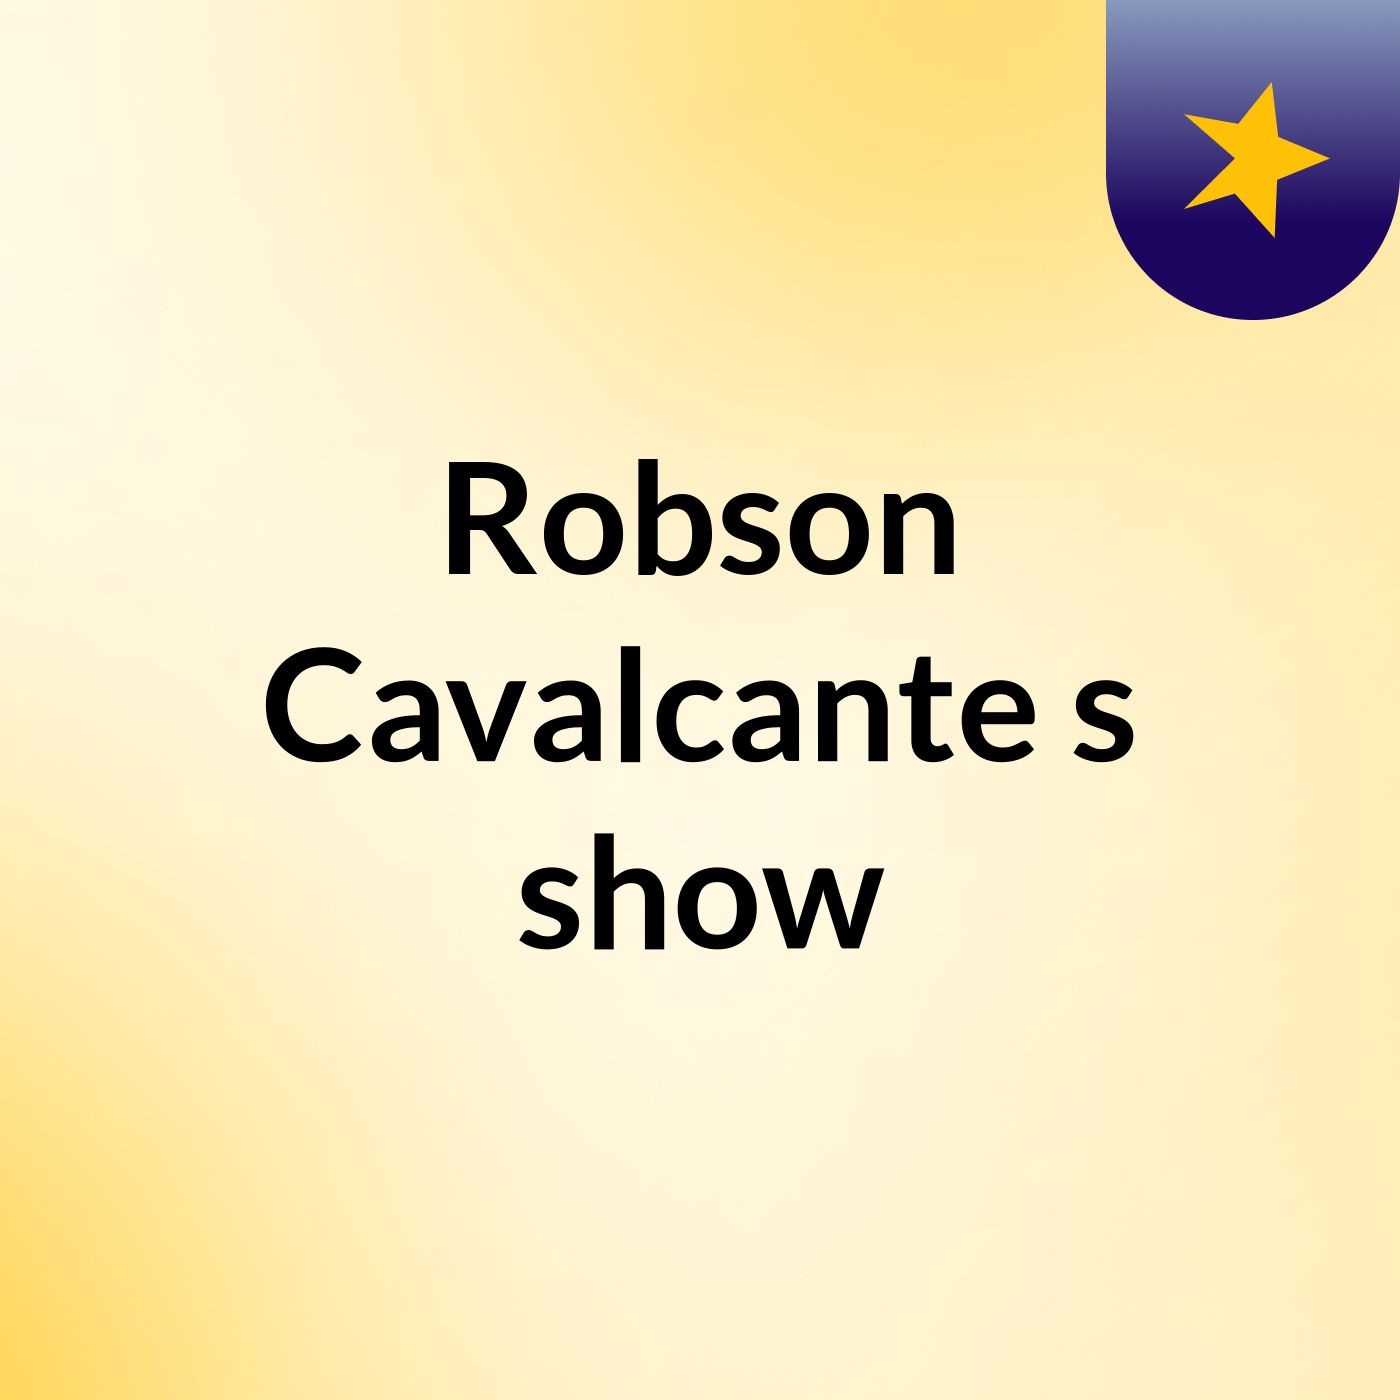 Robson Cavalcante's show